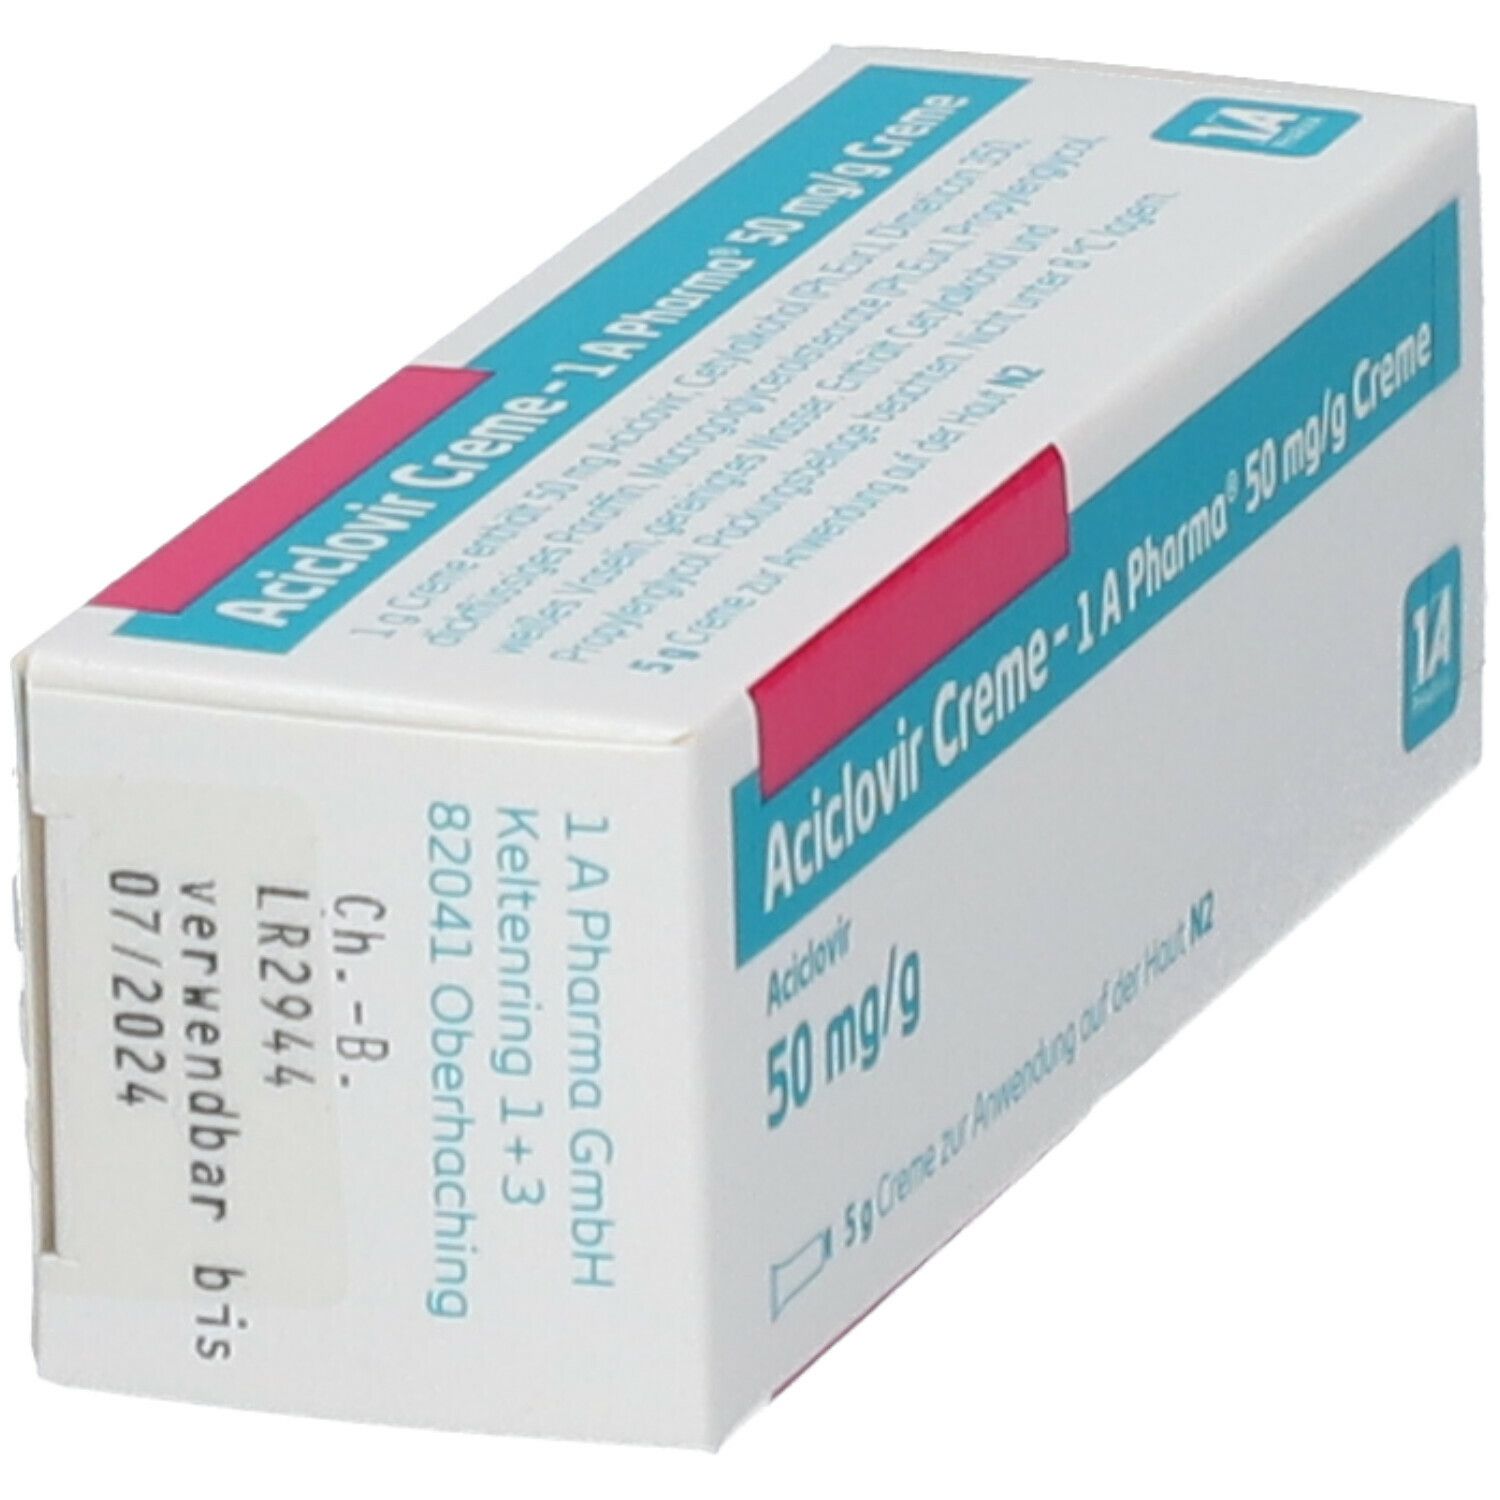 Aciclovir Creme 1A Pharma®